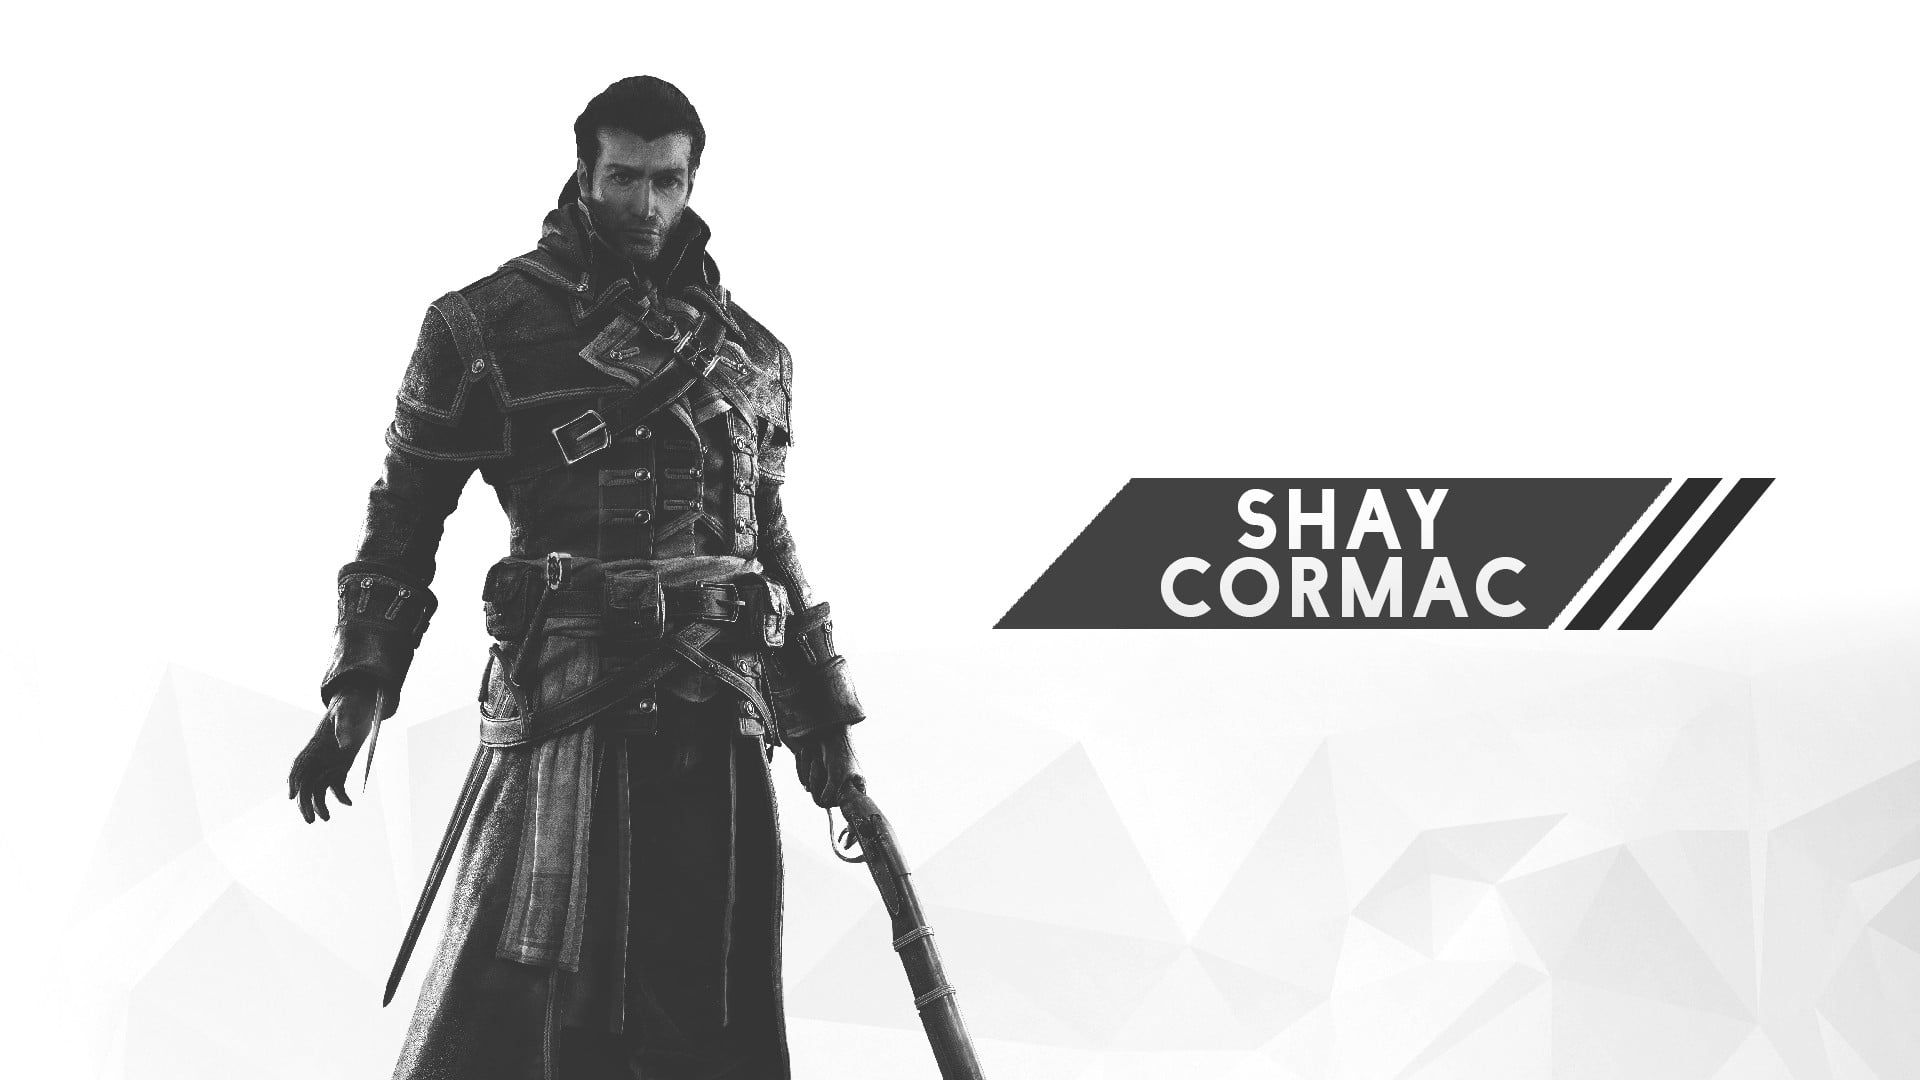 Shay Cormac poster, Assassin's Creed, digital art, minimalism, 2D